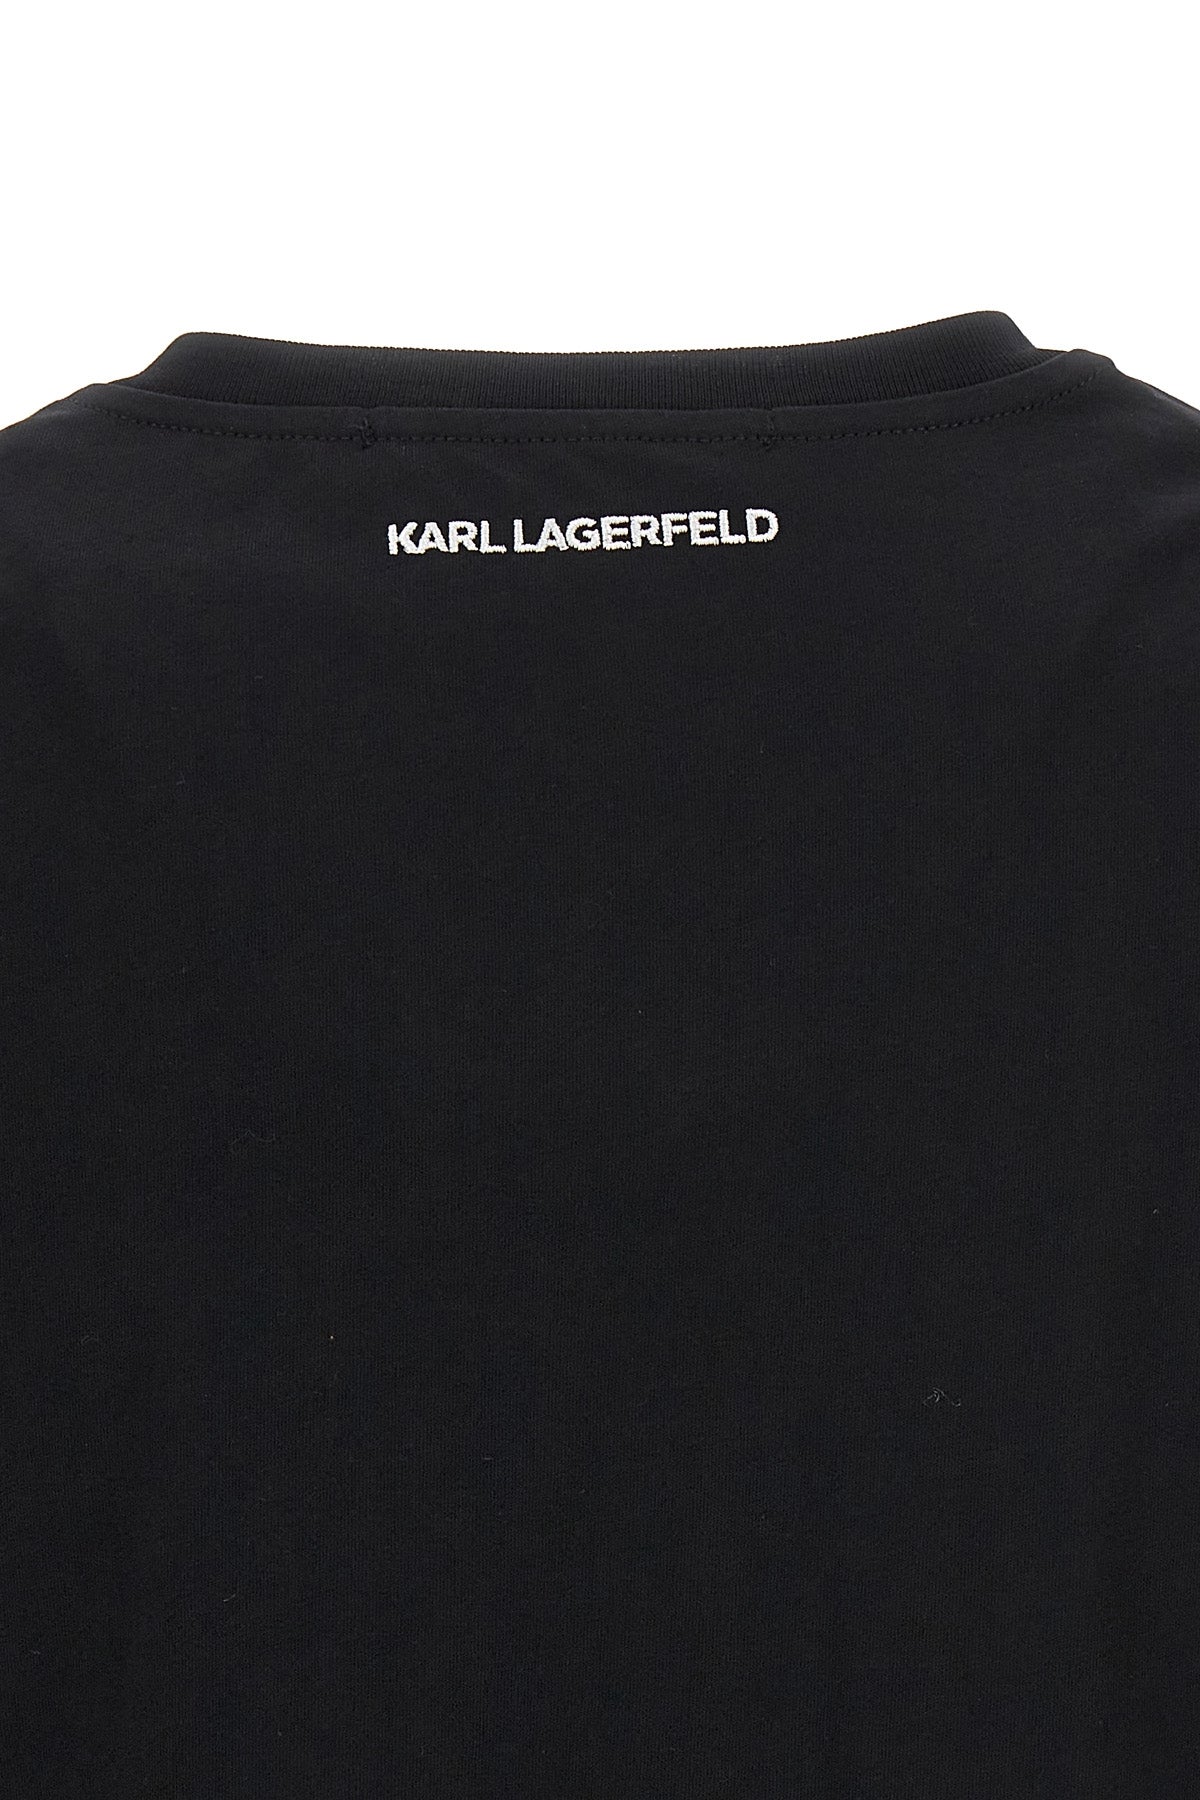 KARL LAGERFELD LOGO T-SHIRT 240W1714999